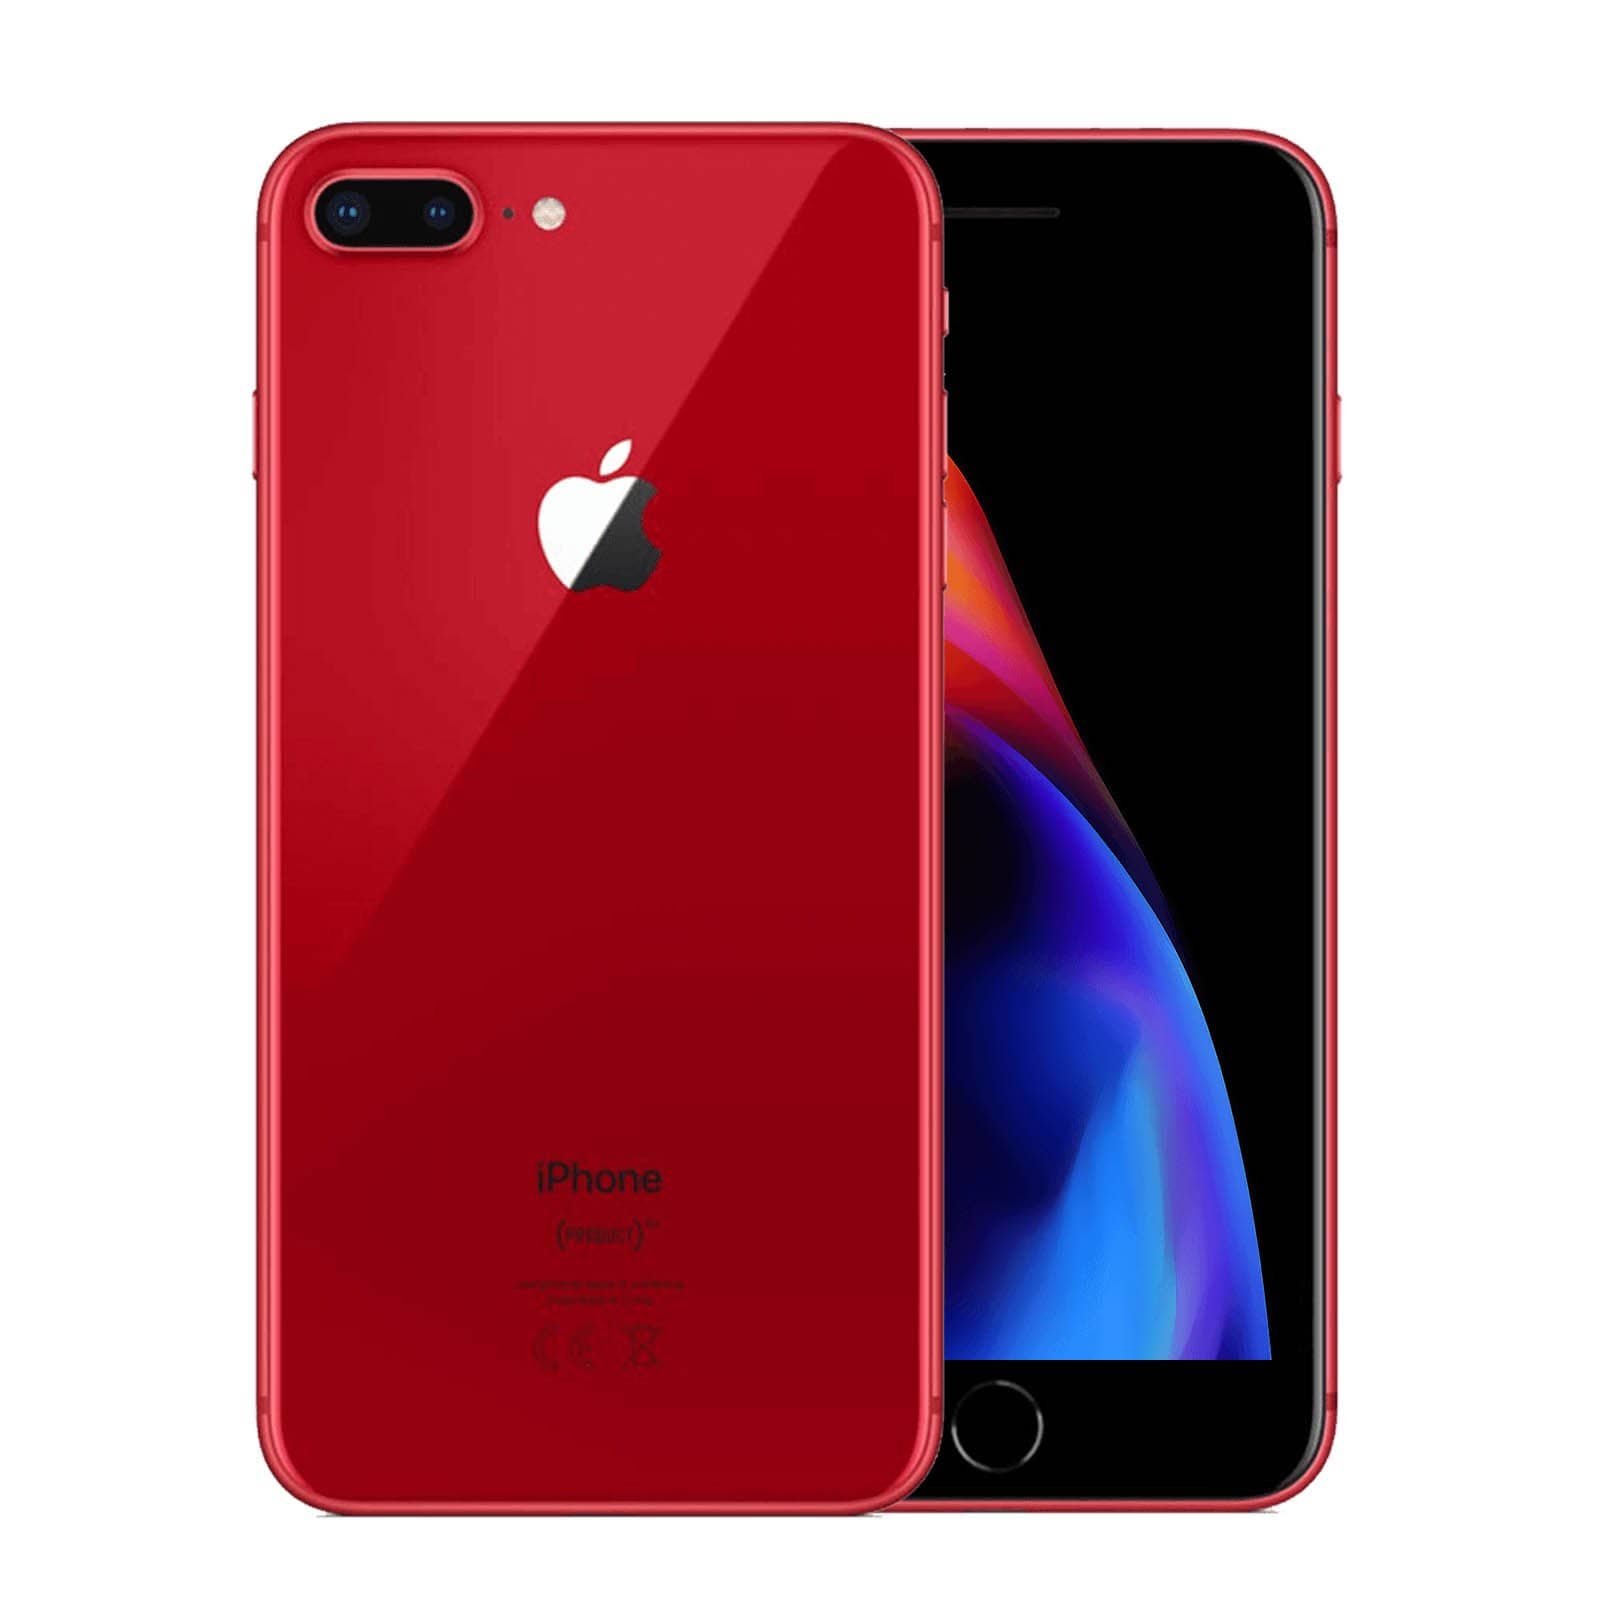 Apple iPhone 8 Plus 256GB Product Red Pristine - Unlocked